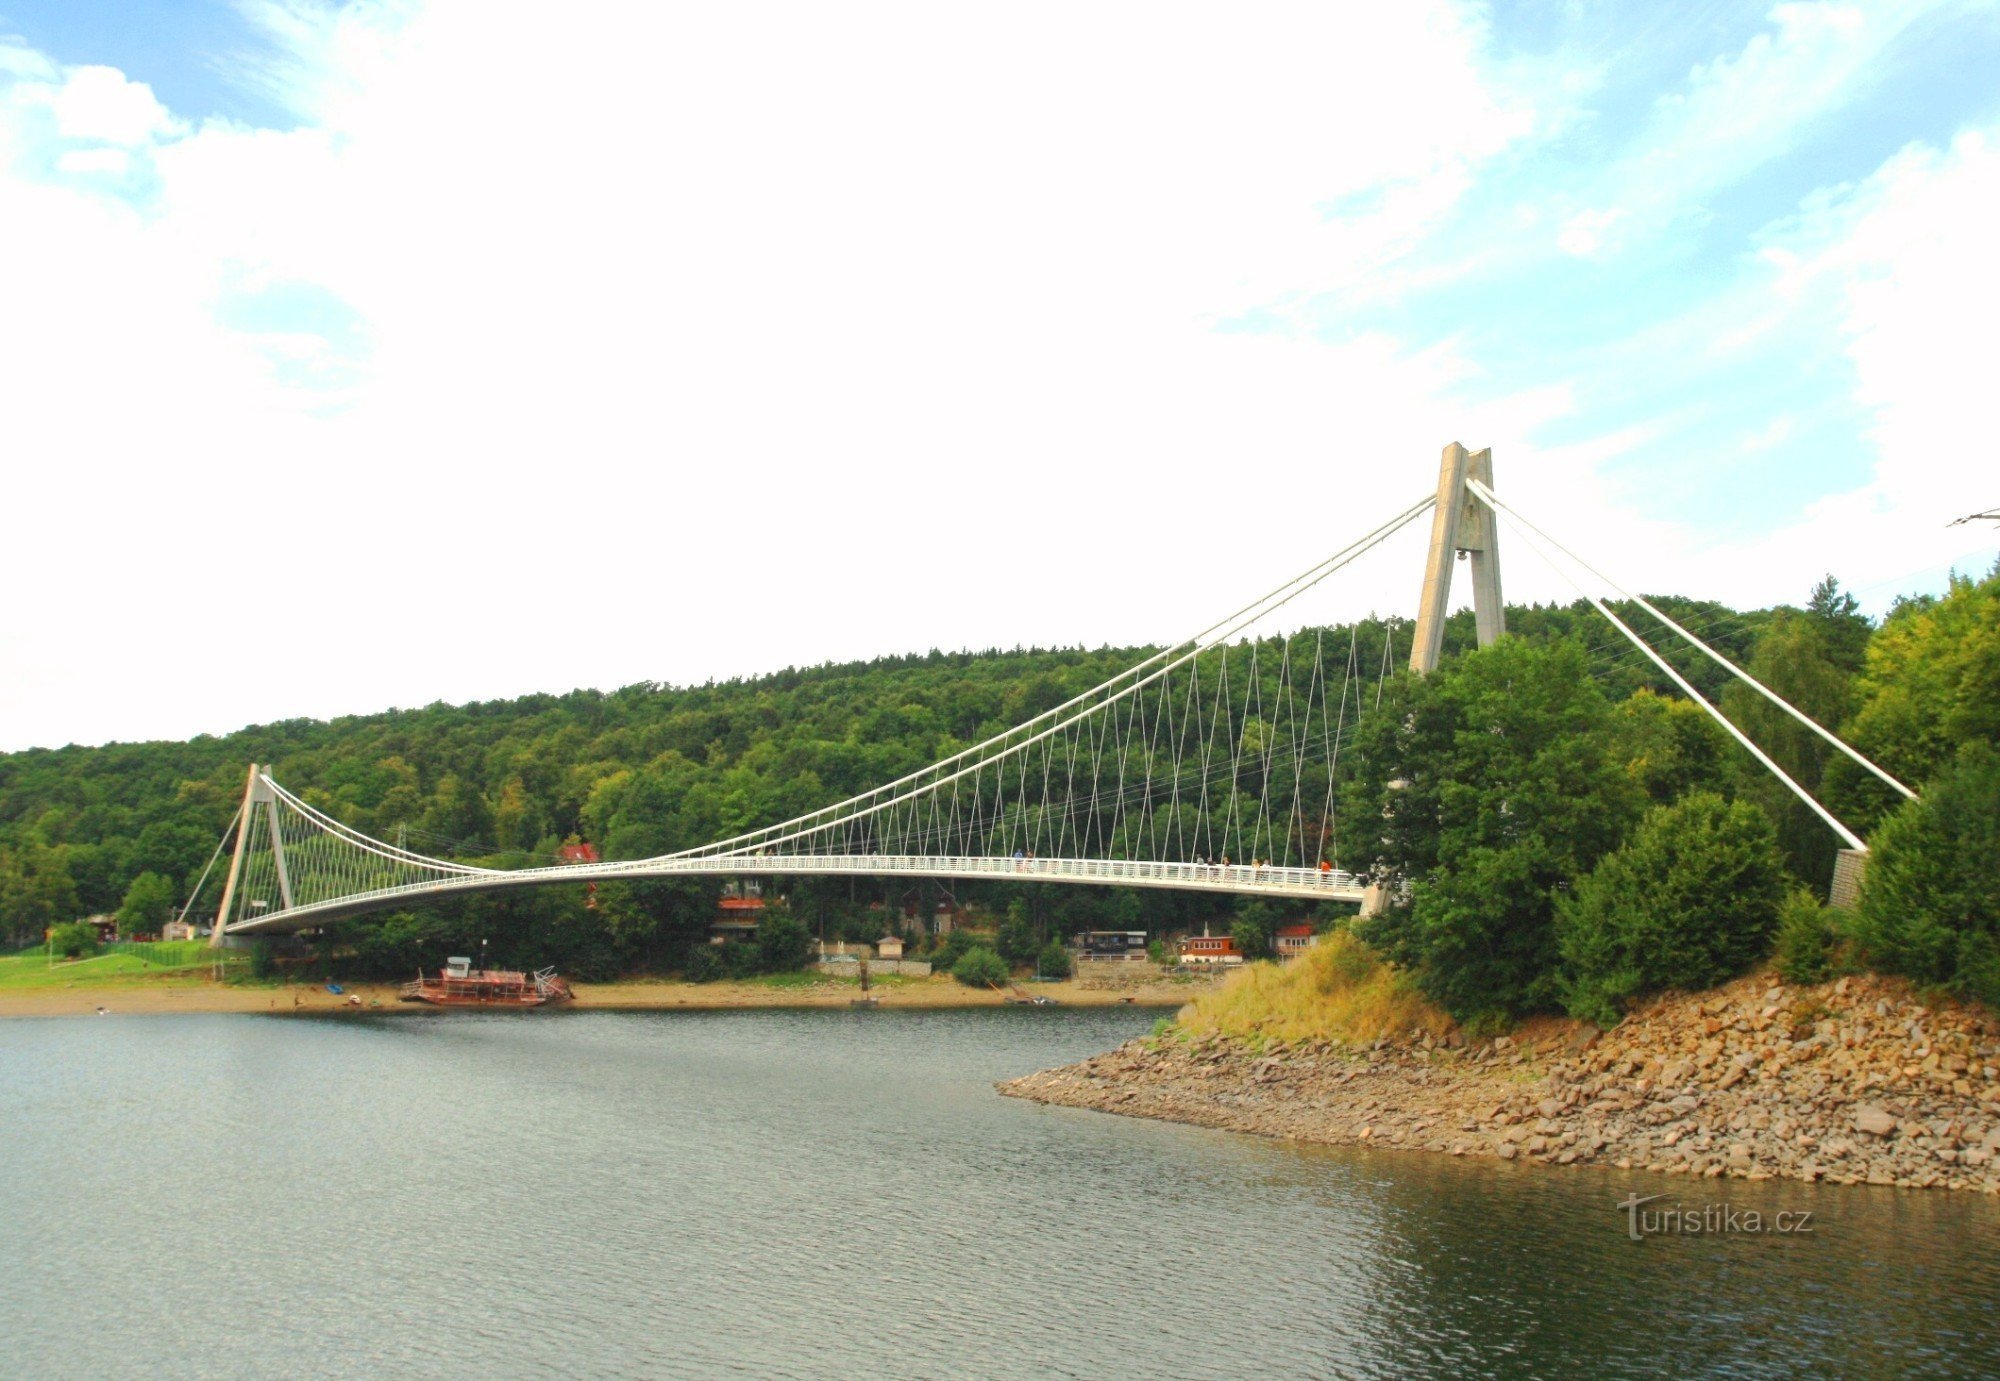 Barragem de Vranovská - passarela sobre a baía suíça